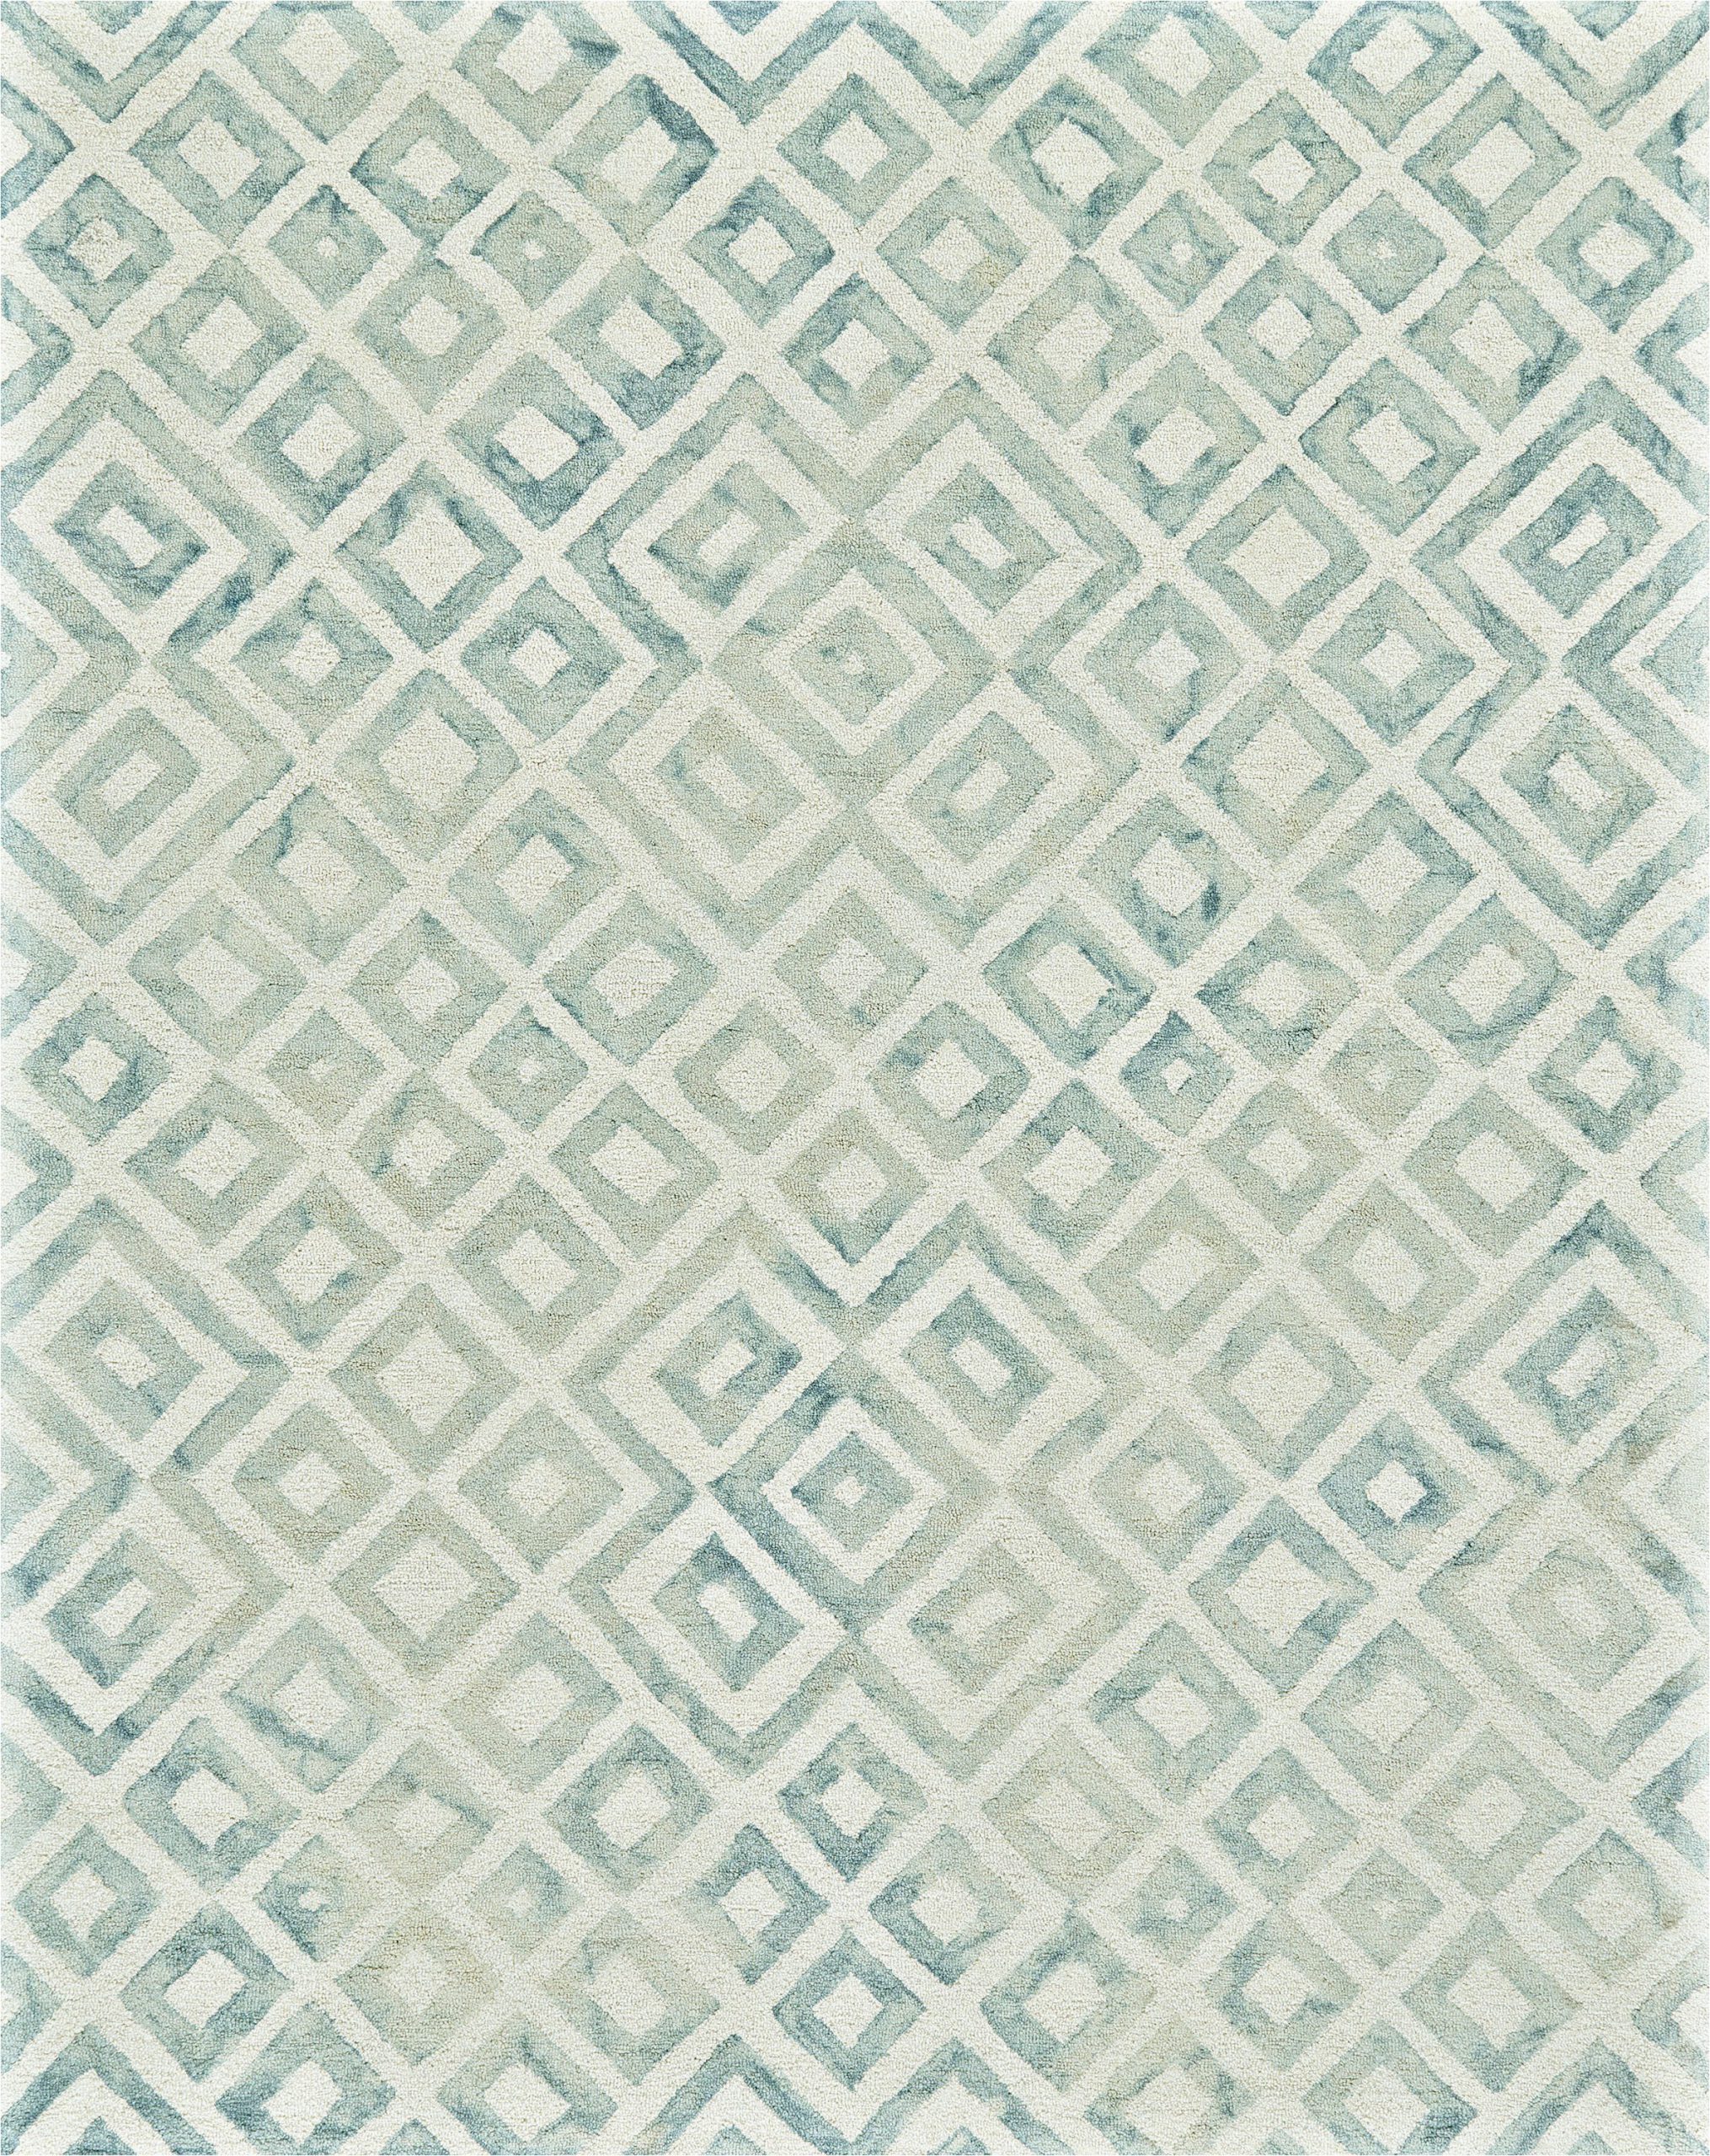 ebern designs frederick geometric hand hooked wool bluebeige area rug ebnd6366 piid=